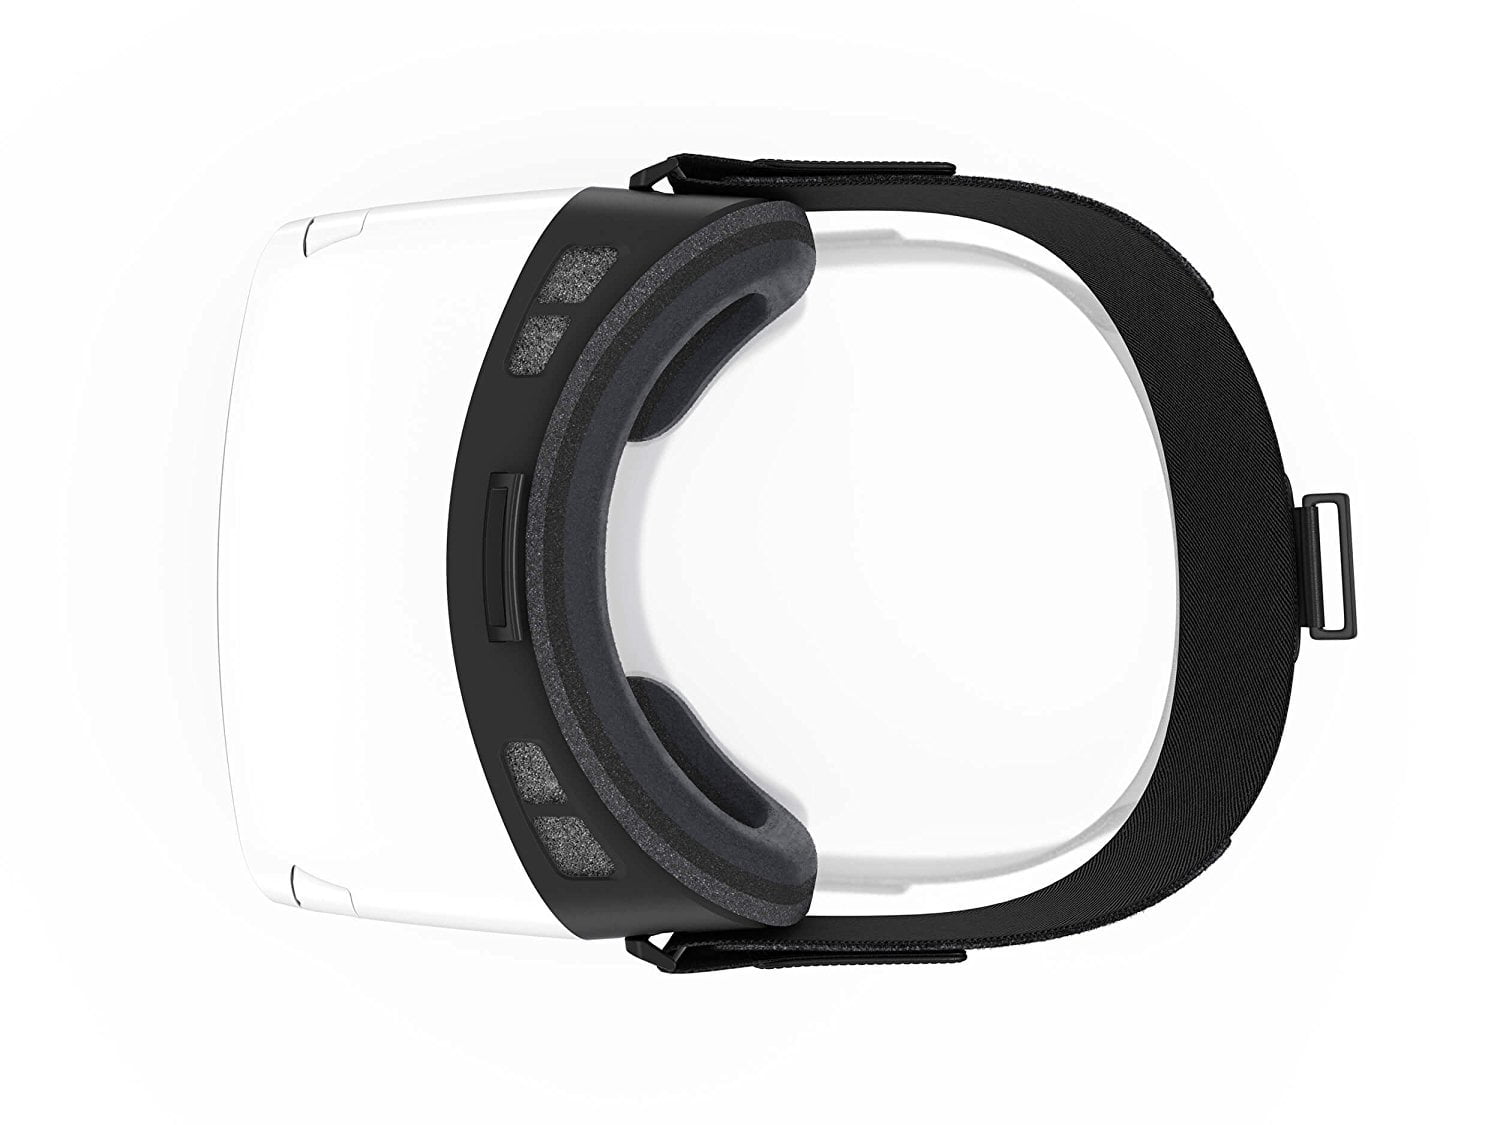 Åben Evne dal Zeiss VR ONE Plus Headset - Walmart.com